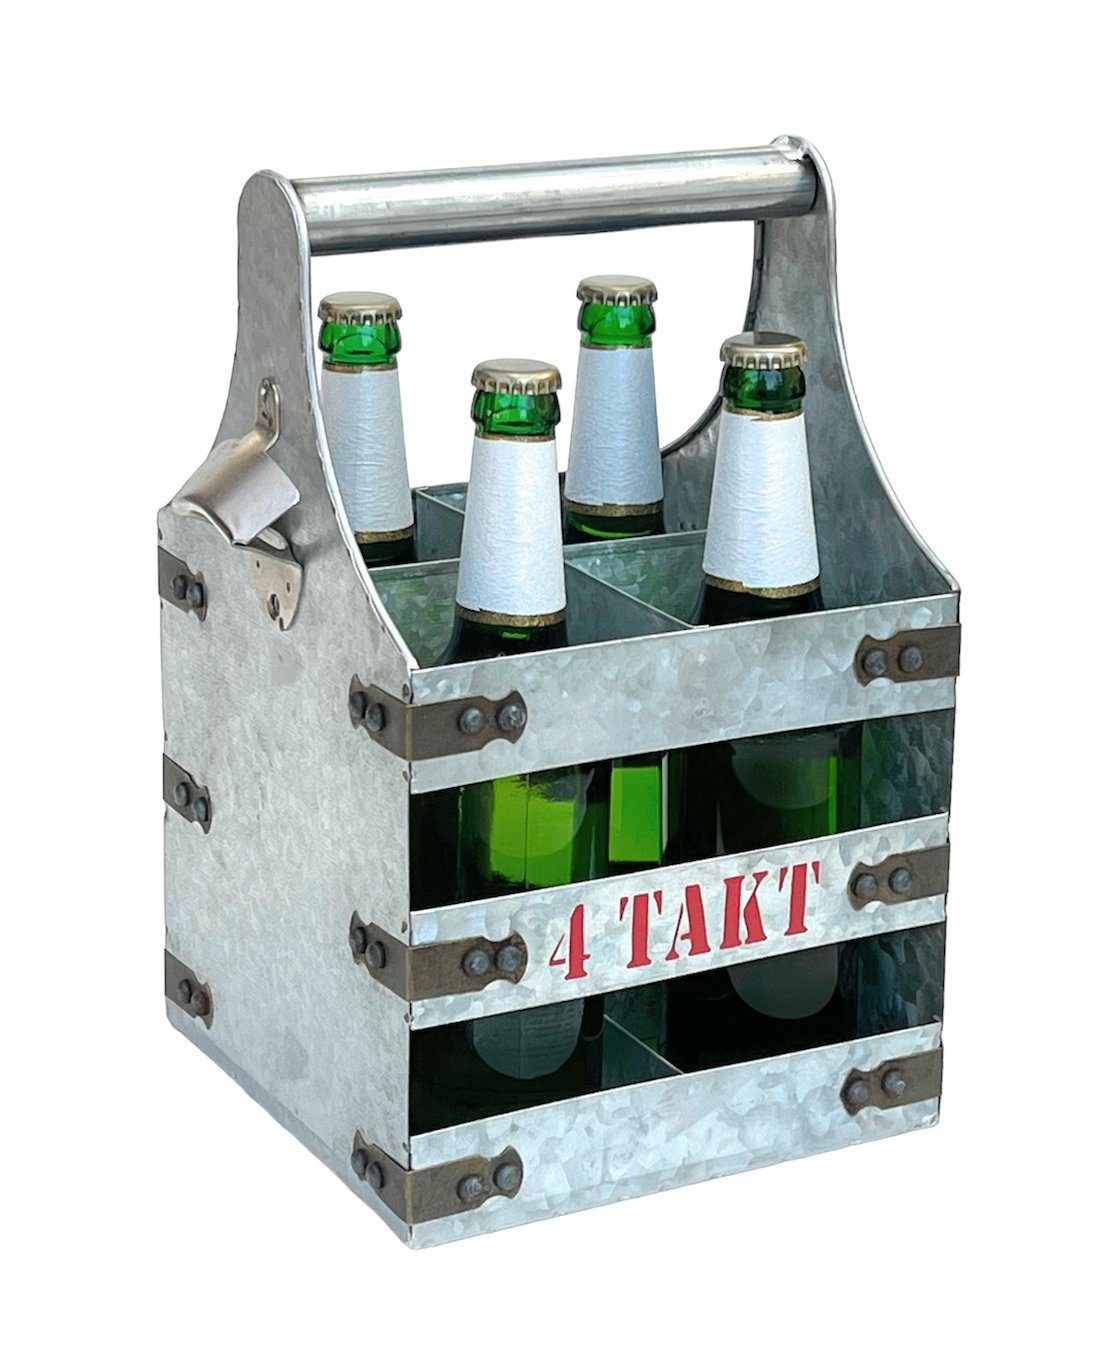 DanDiBo Flaschenträger Bierträger Metall mit Öffner Flaschenträger 4 Takt 96405